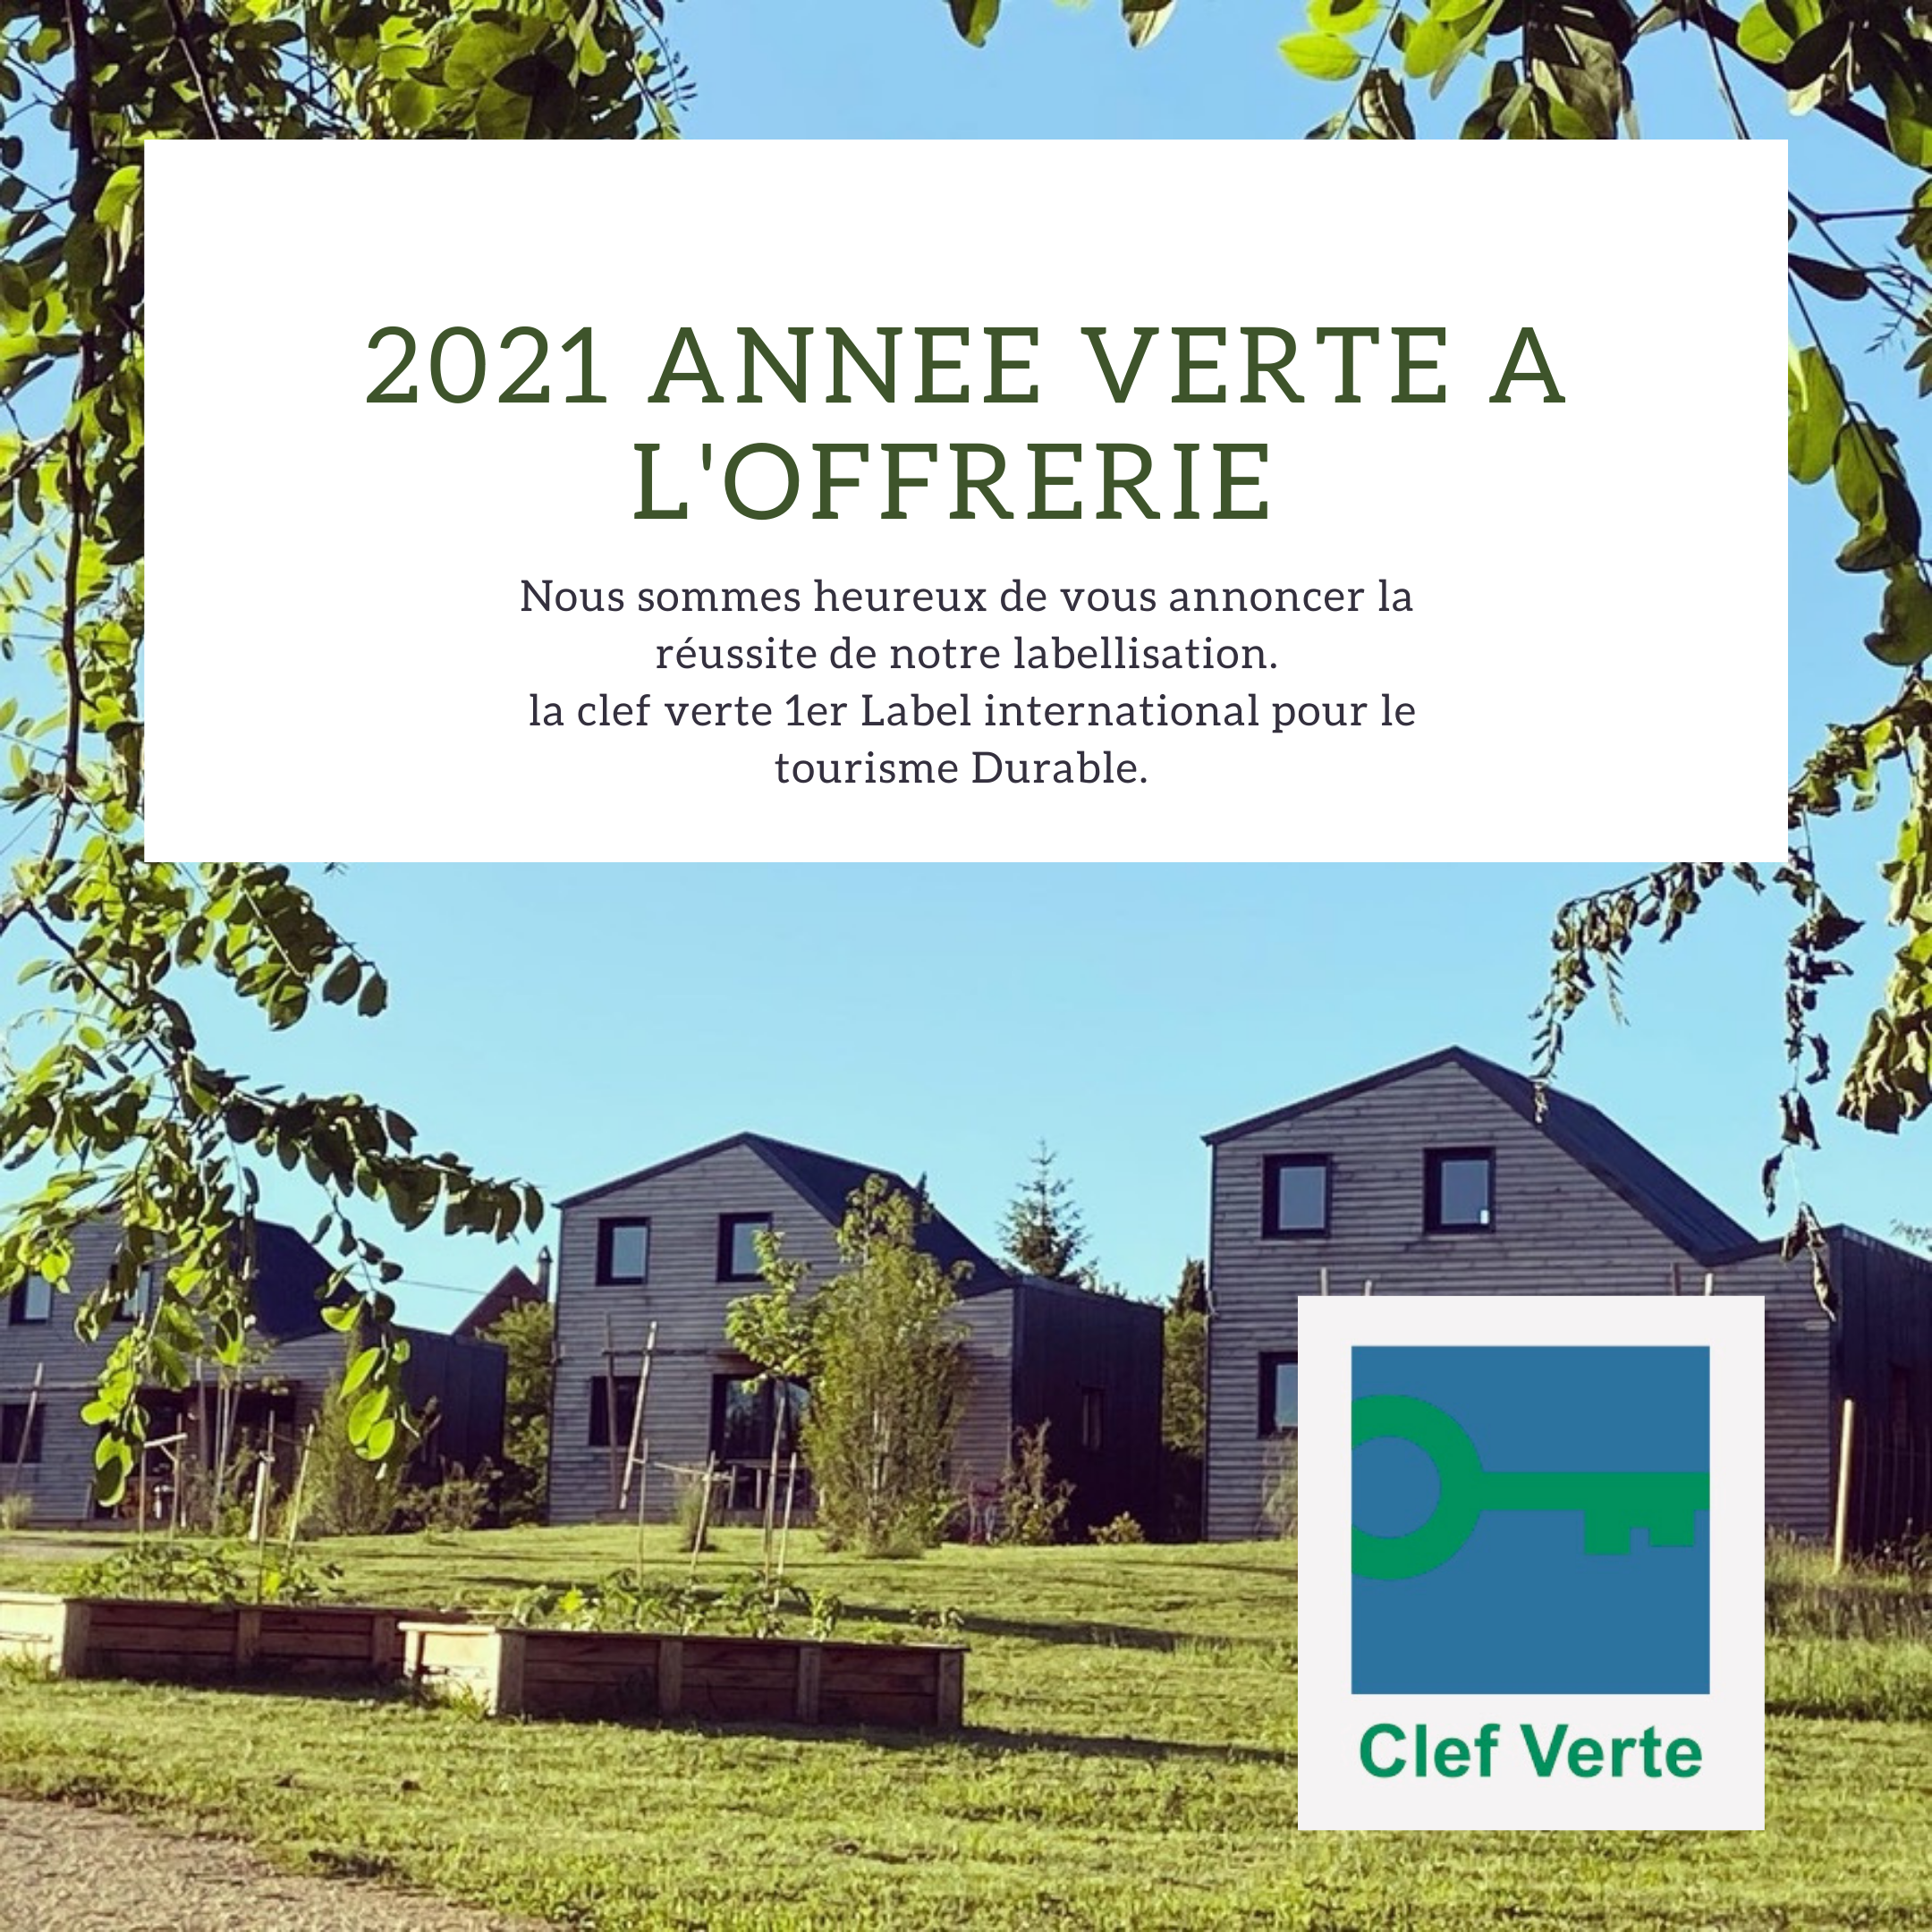 2021 Green Year